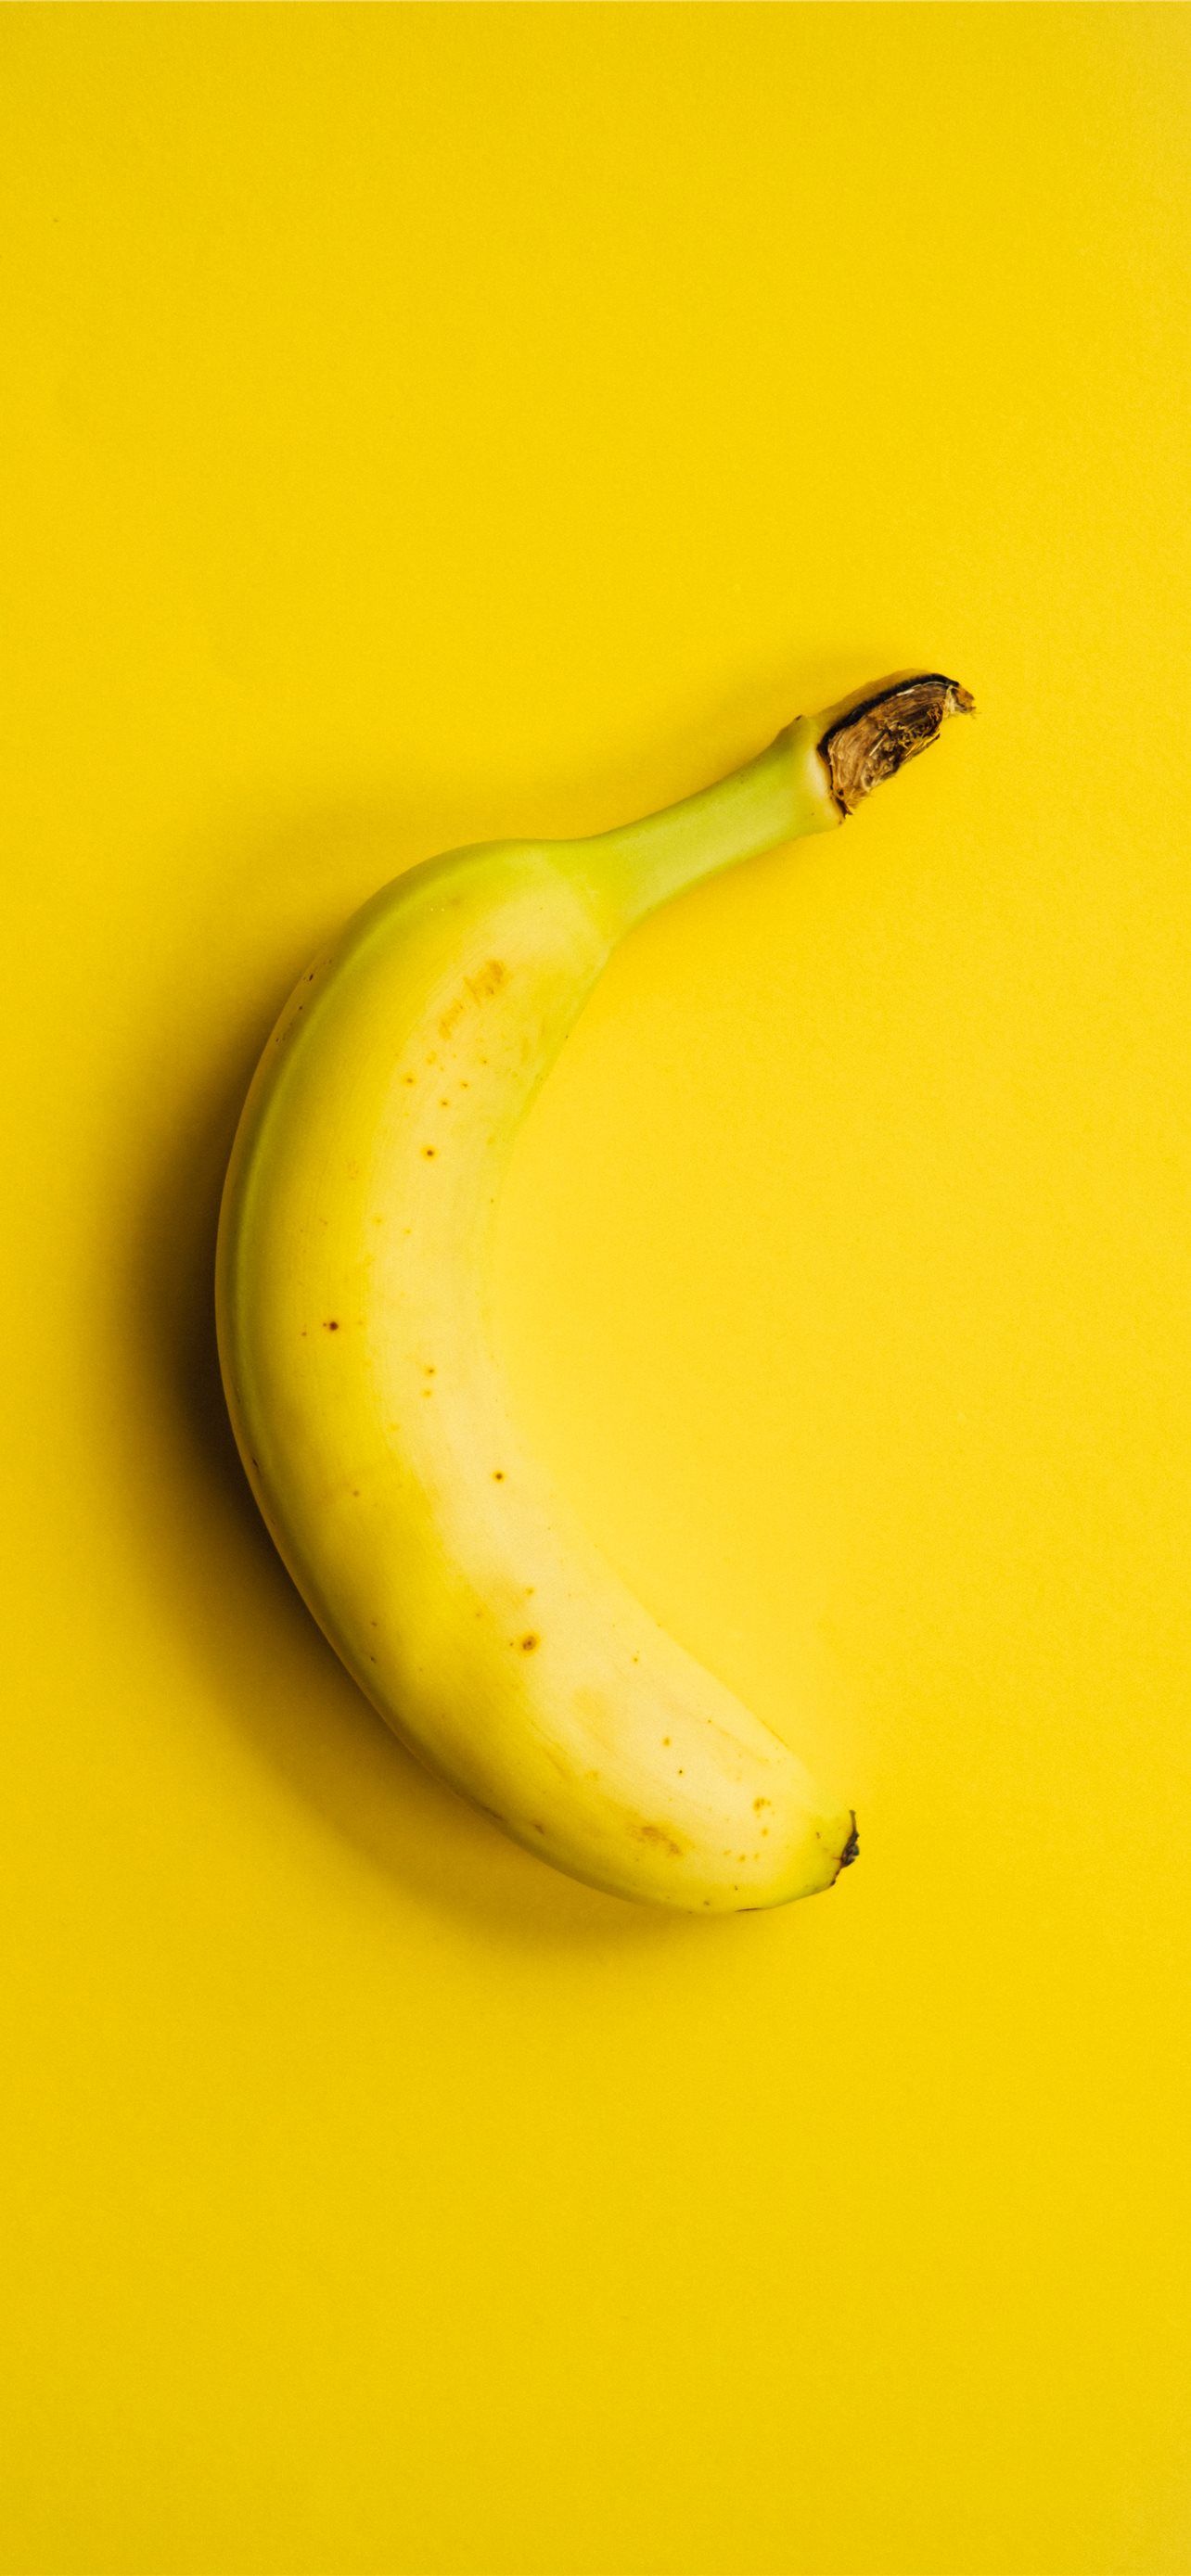 yellow banana fruit on yellow surface iPhone Wallpaper Free Download